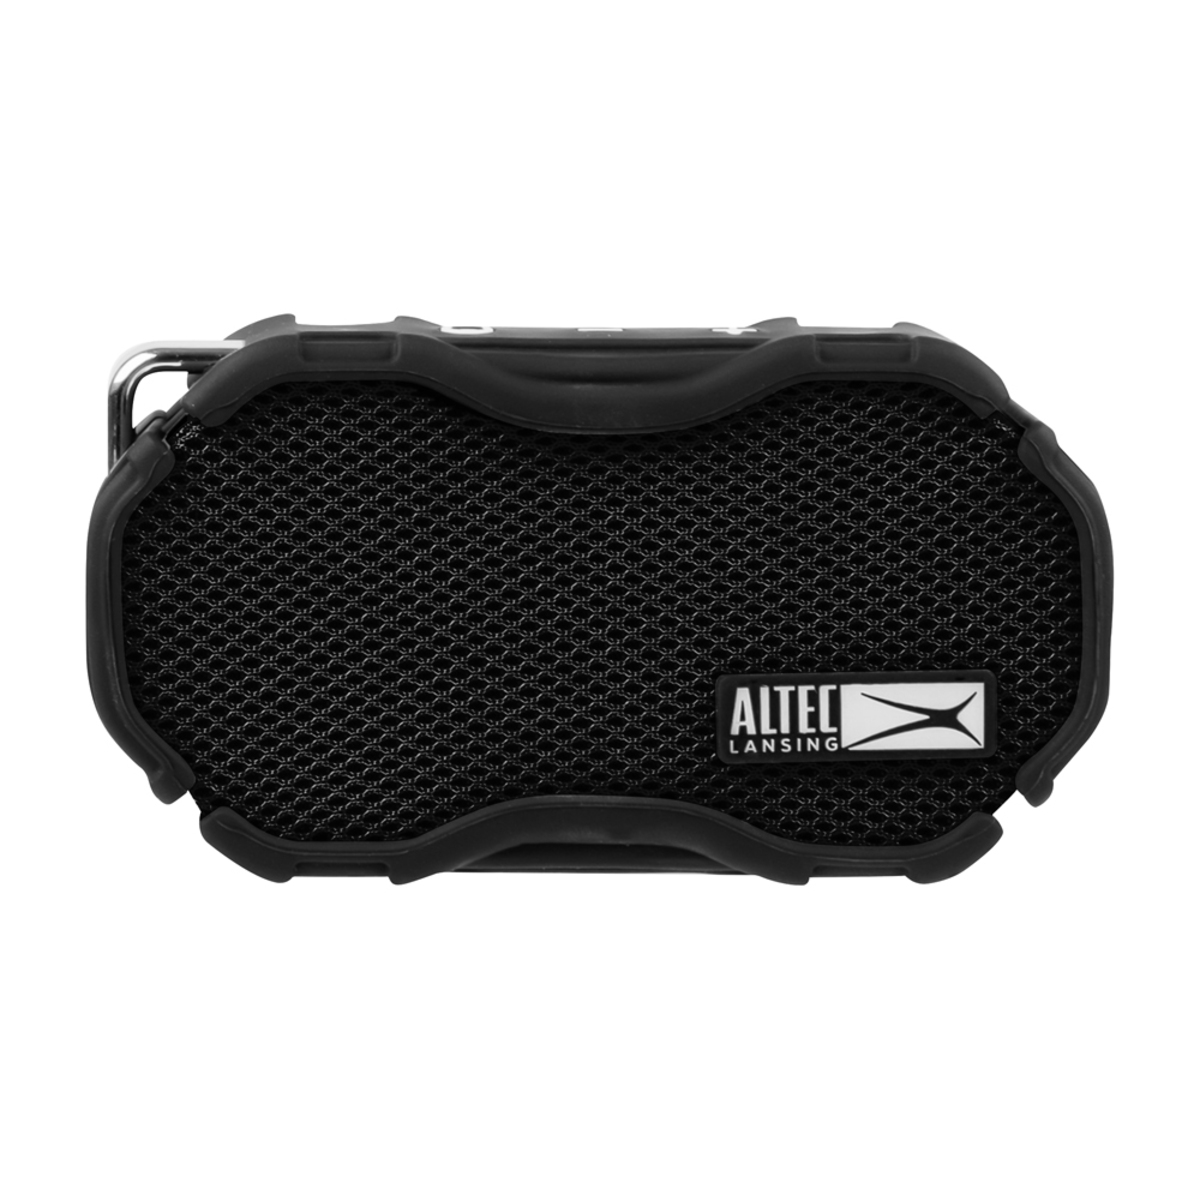 Altec Lansing Baby Boom Bluetooth Speaker IMW269N Black